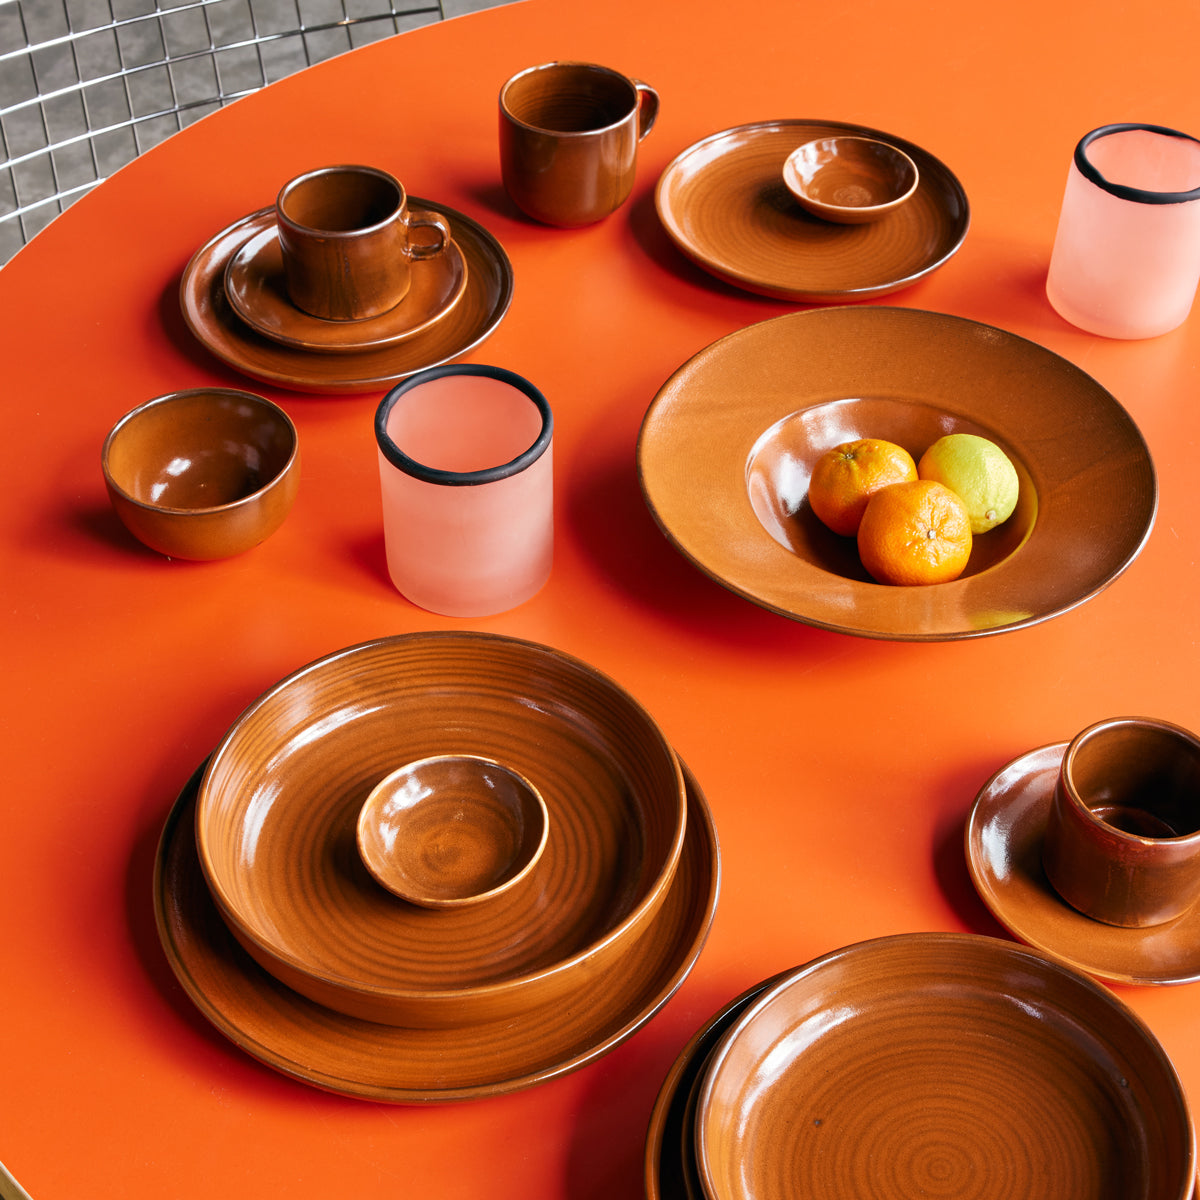 Chef Ceramics: Dinner Plate, Burned Orange